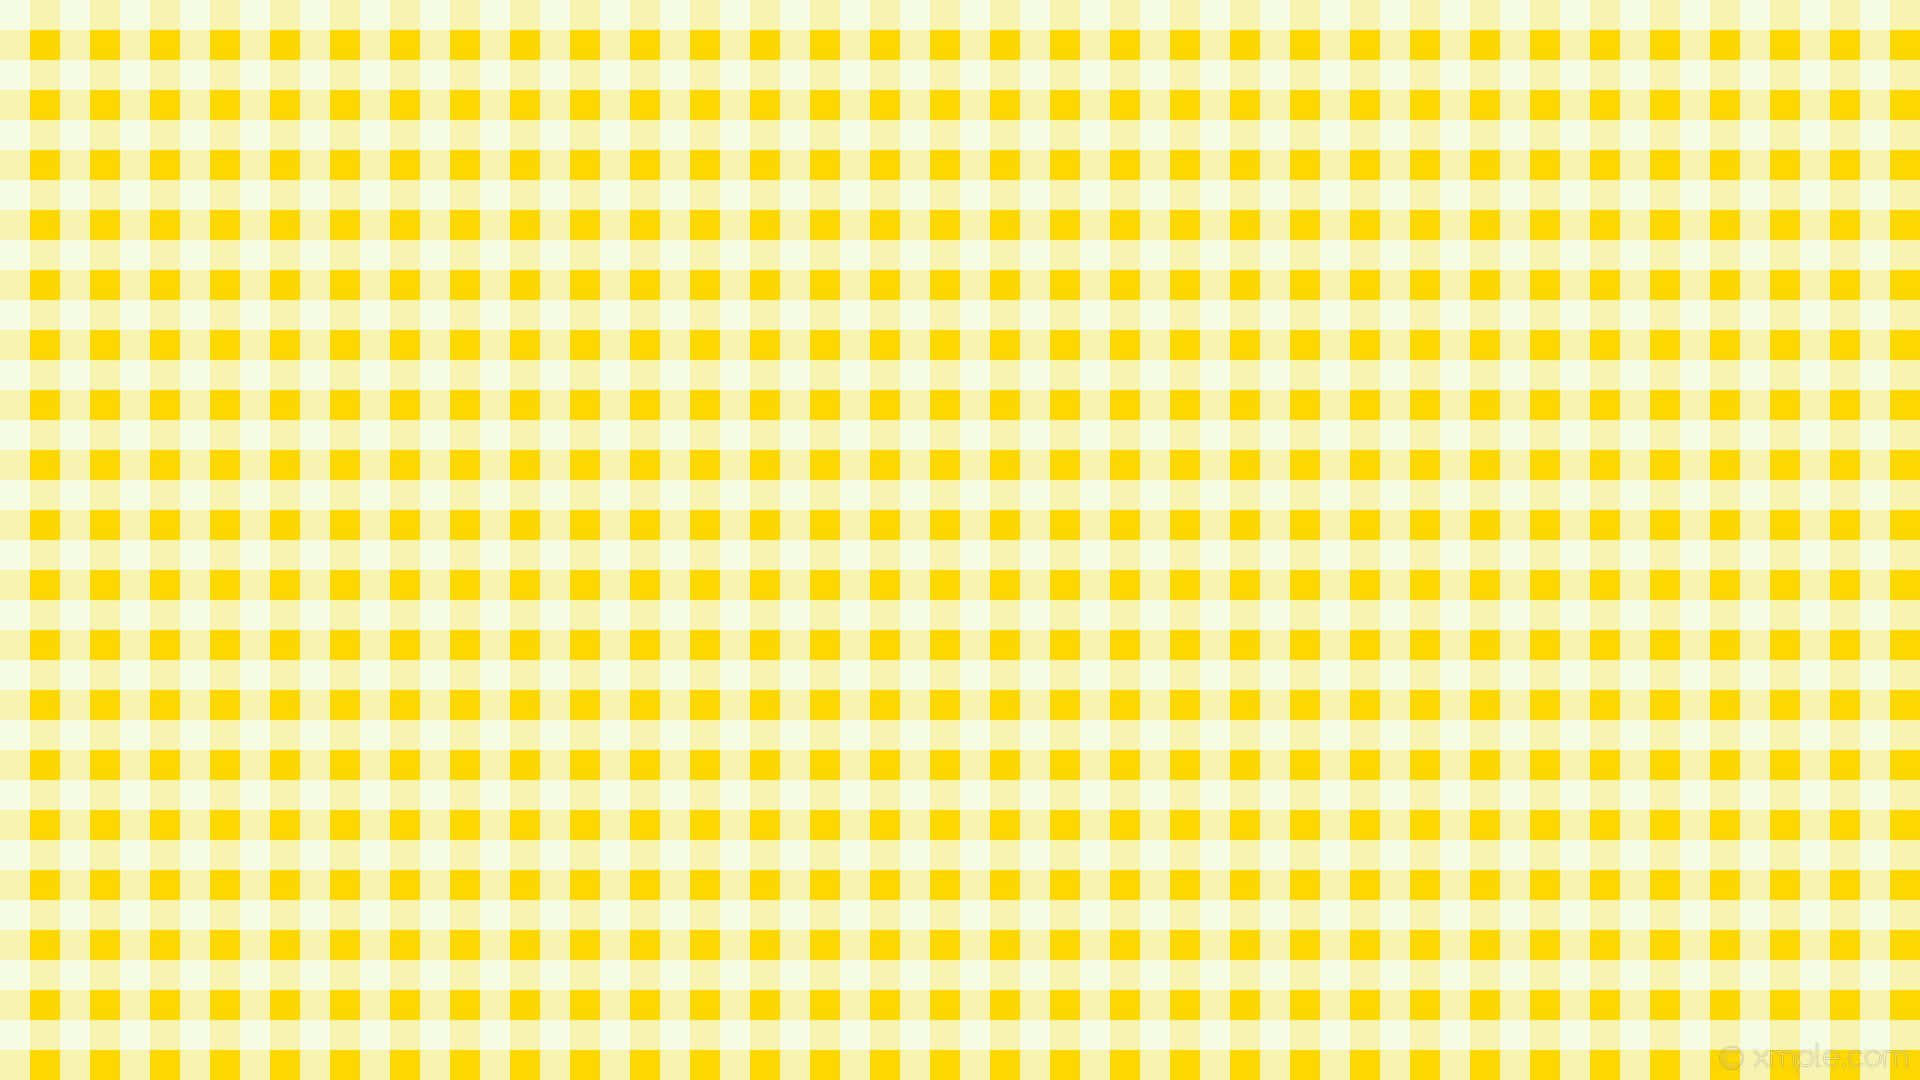 Vibrant and Fun Cute Yellow Desktop Wallpaper